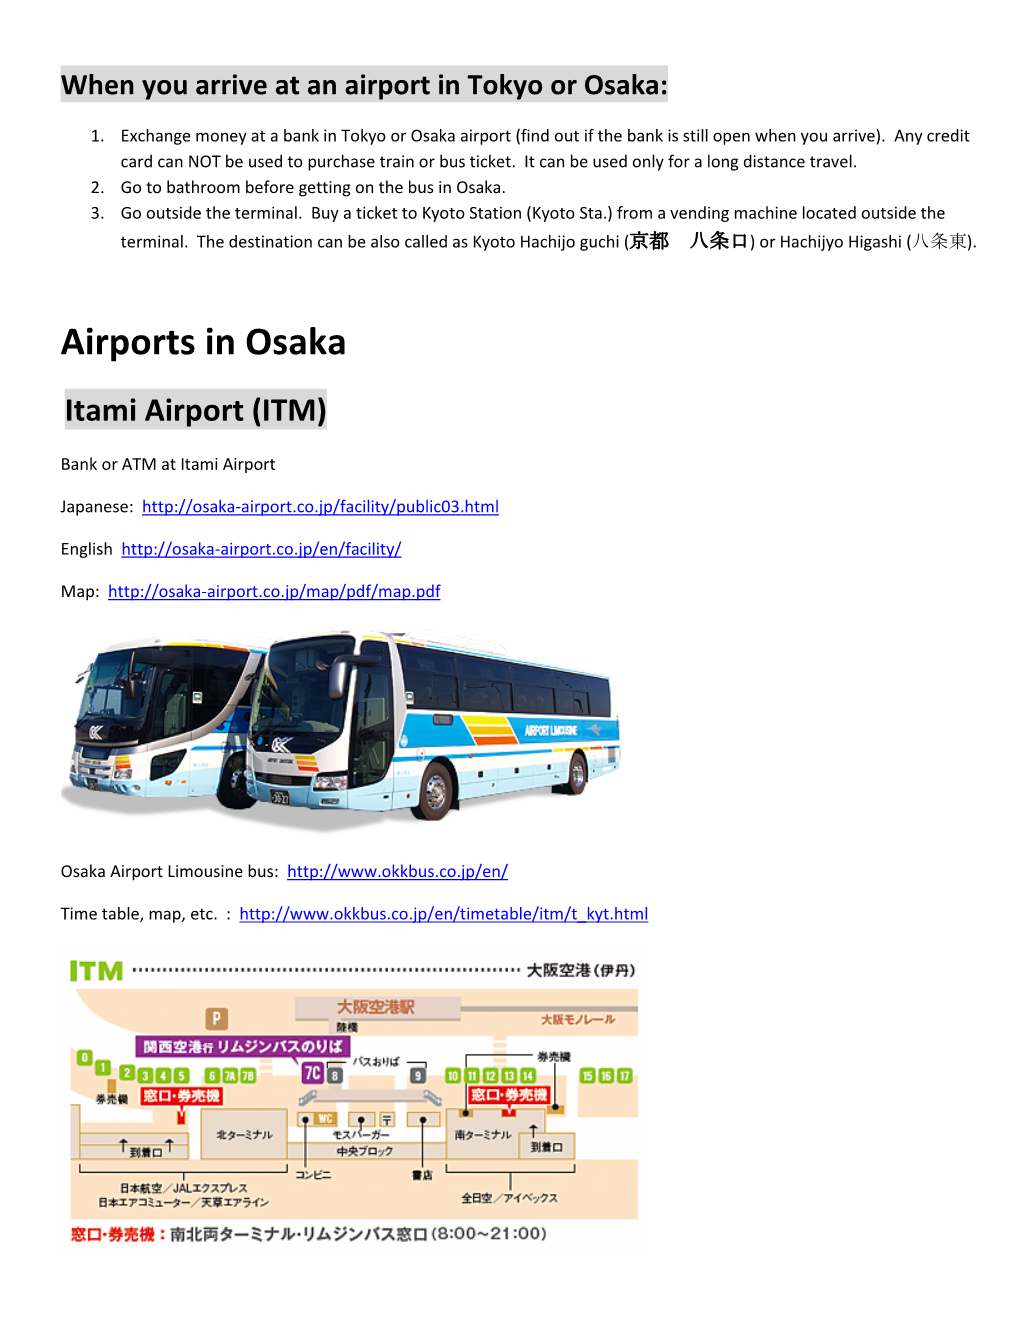 Airports in Osaka